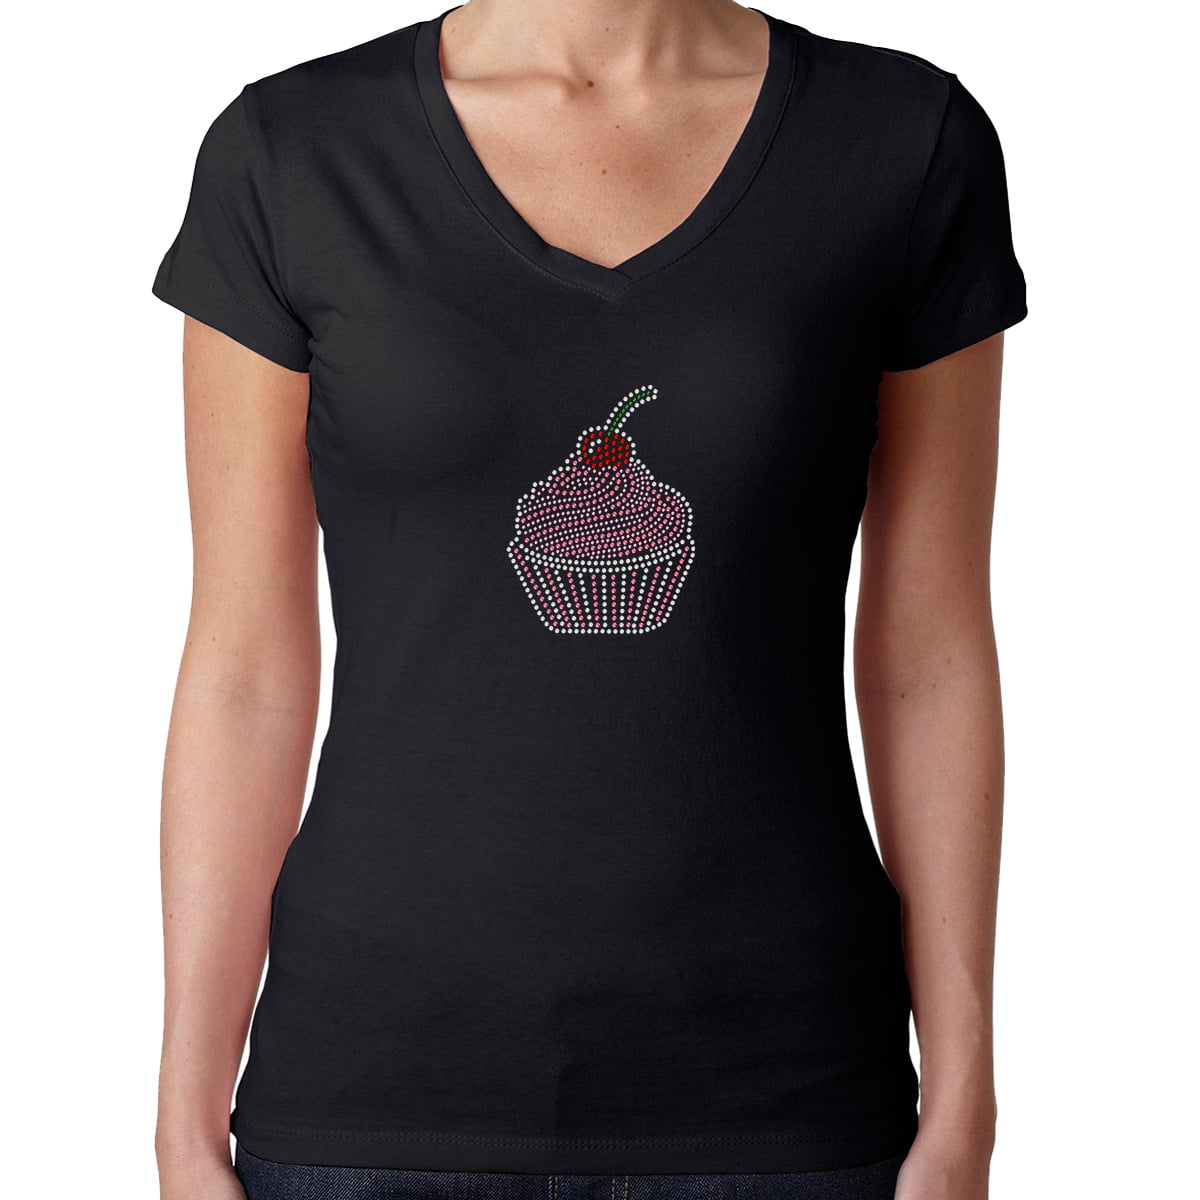 cupcake factory champion shirt